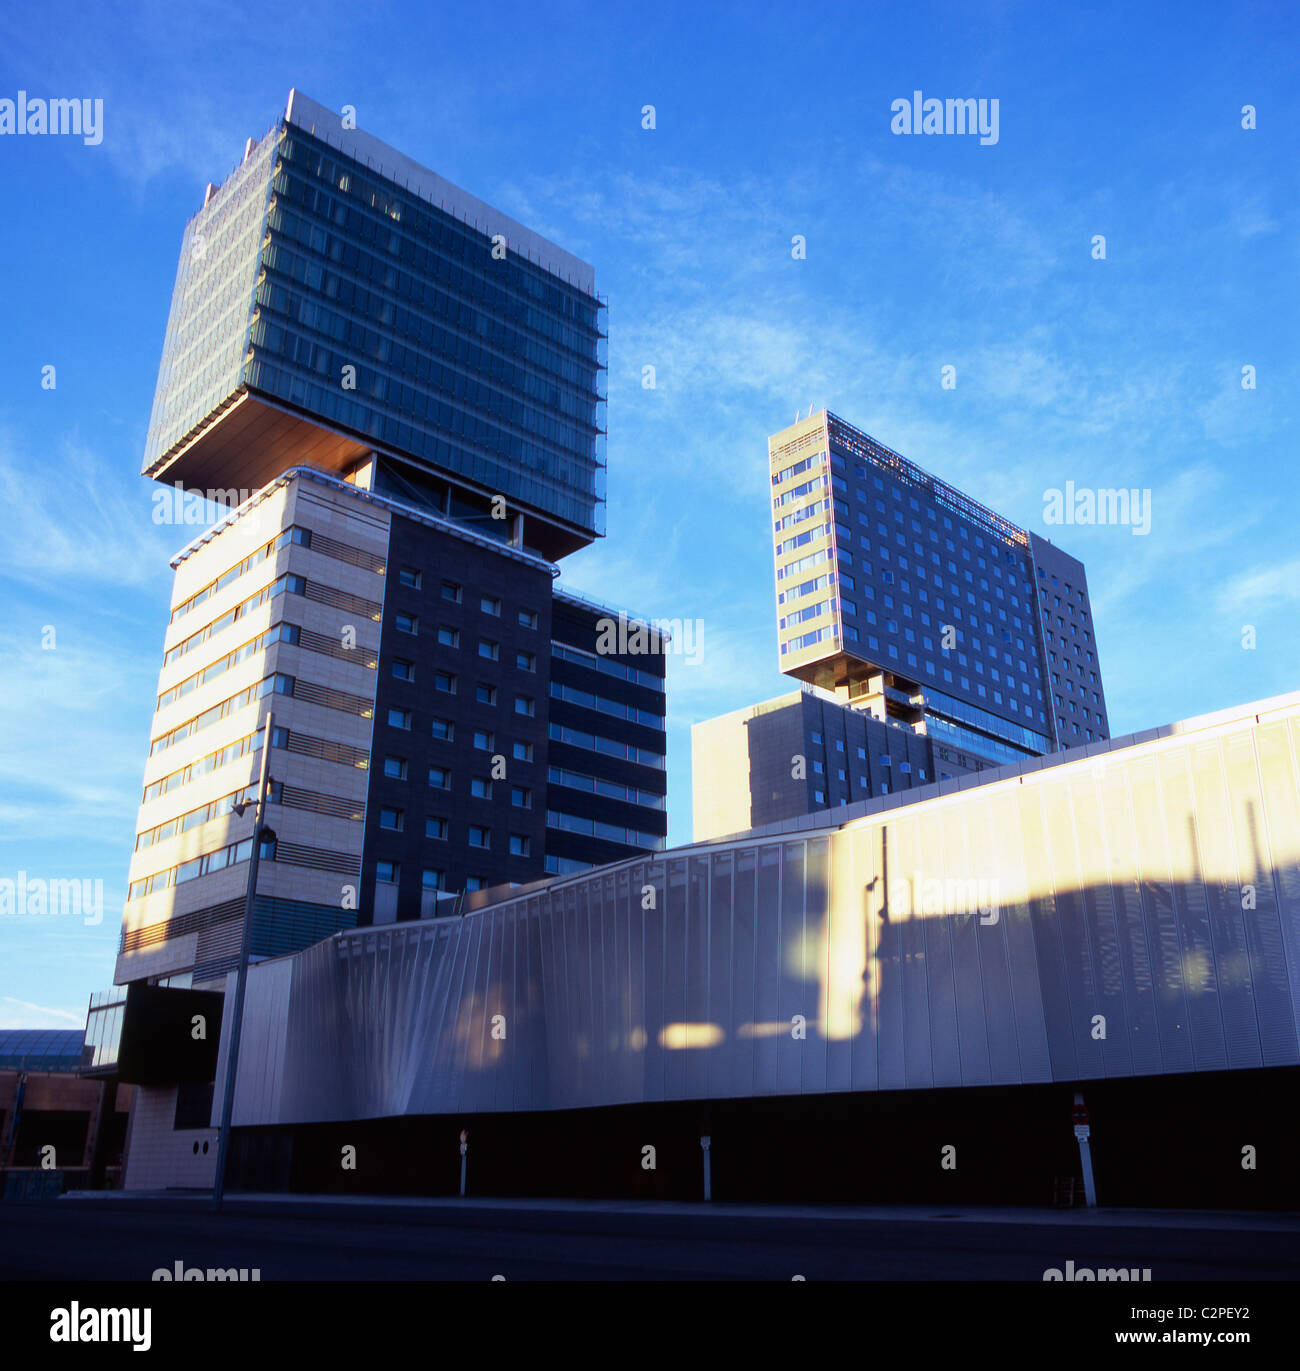 AC Hotel Forum - Alamy